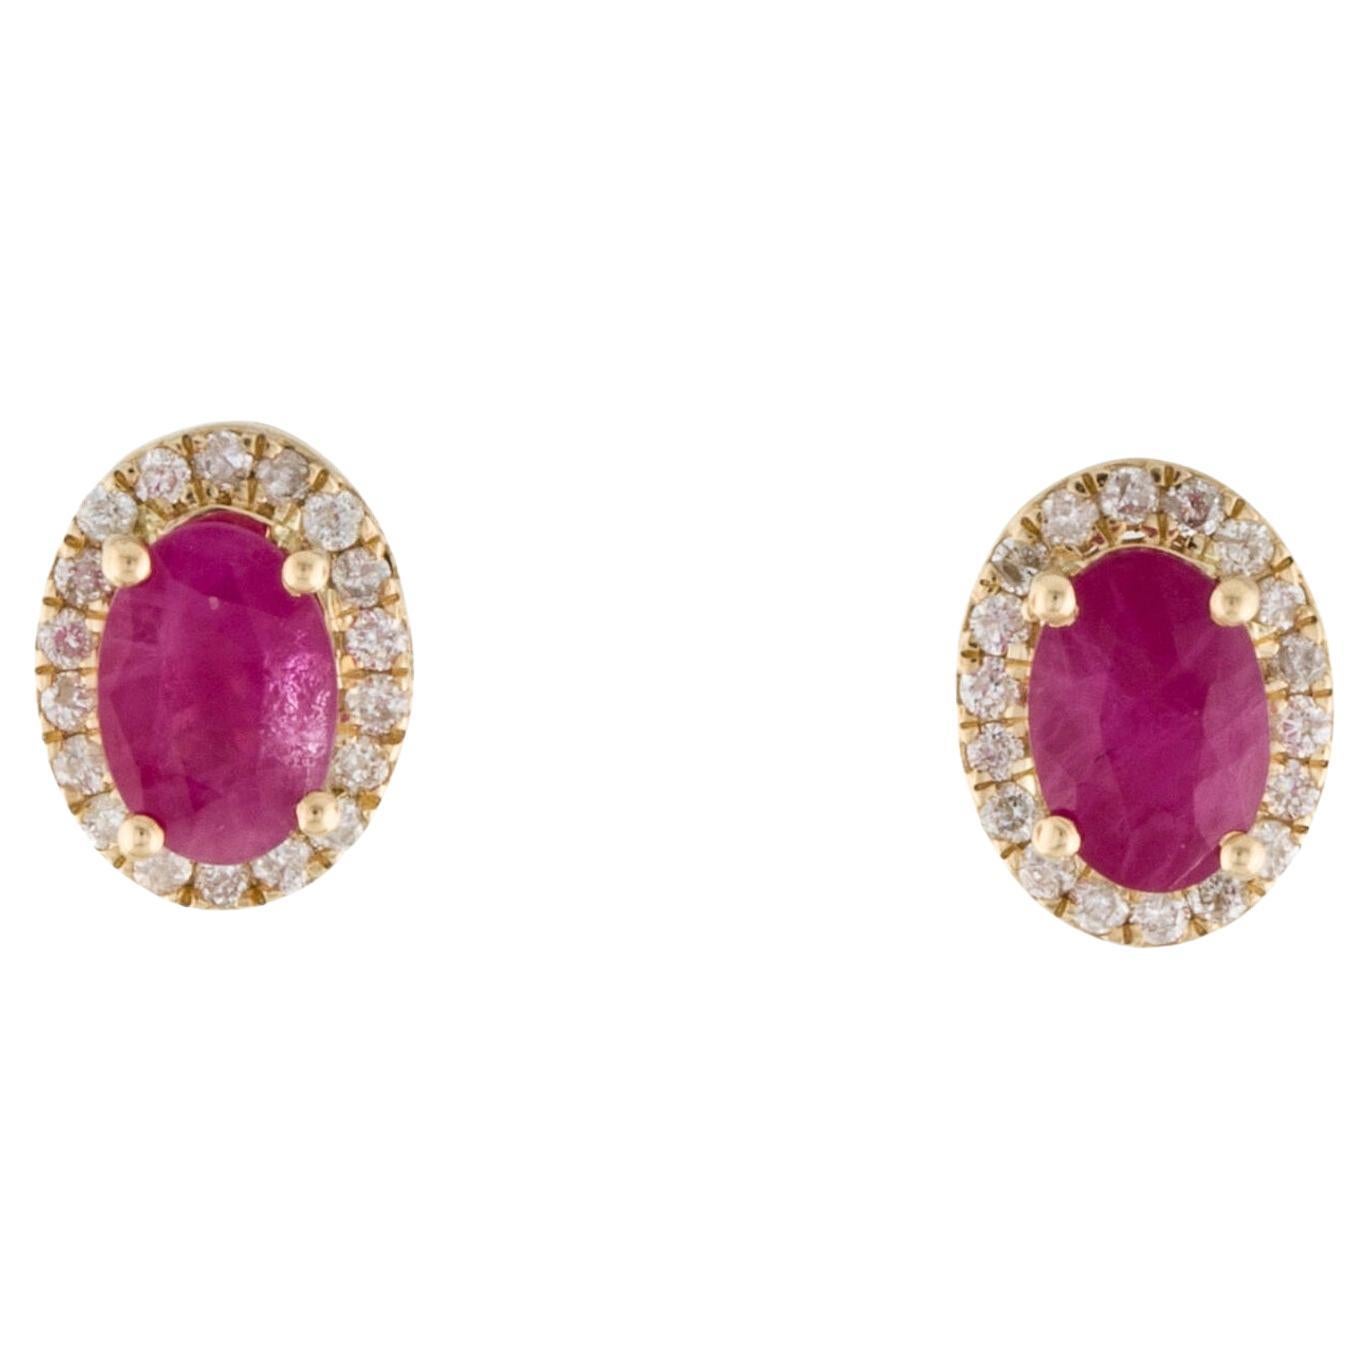 Stunning 14K 1.52ctw Ruby & Diamond Studs - Elegant Gemstone Earrings For Sale